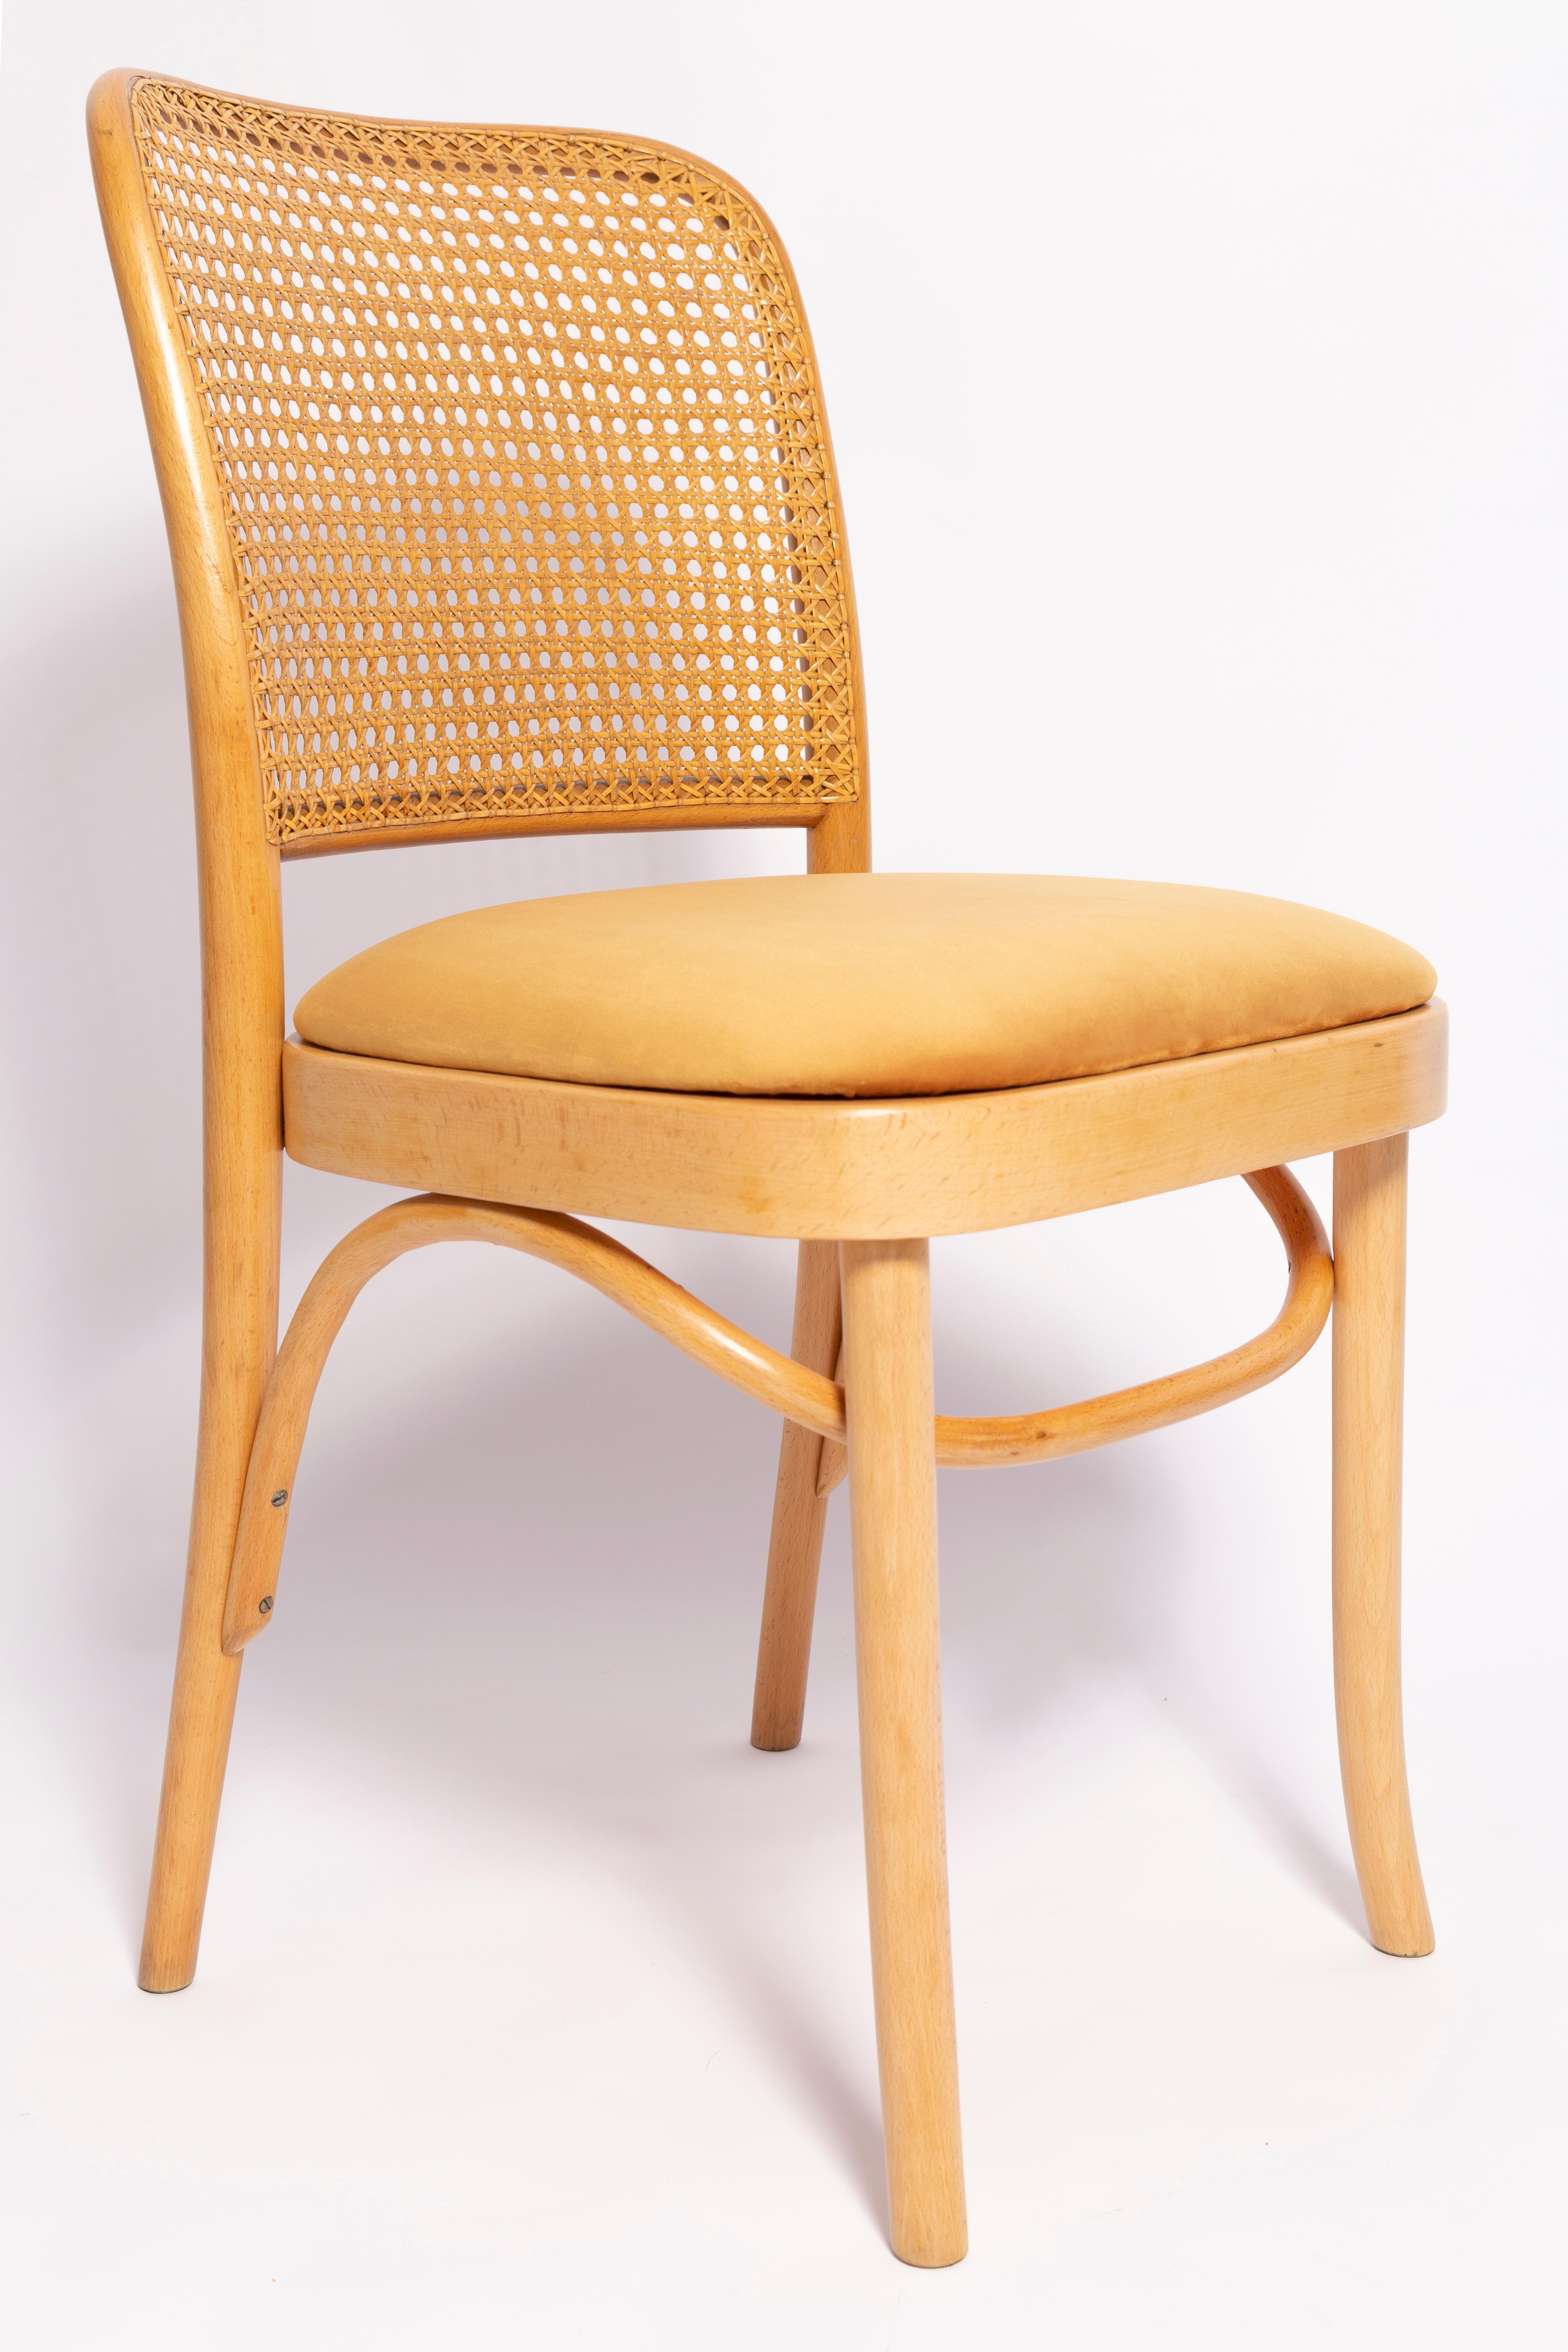 yellow rattan chair